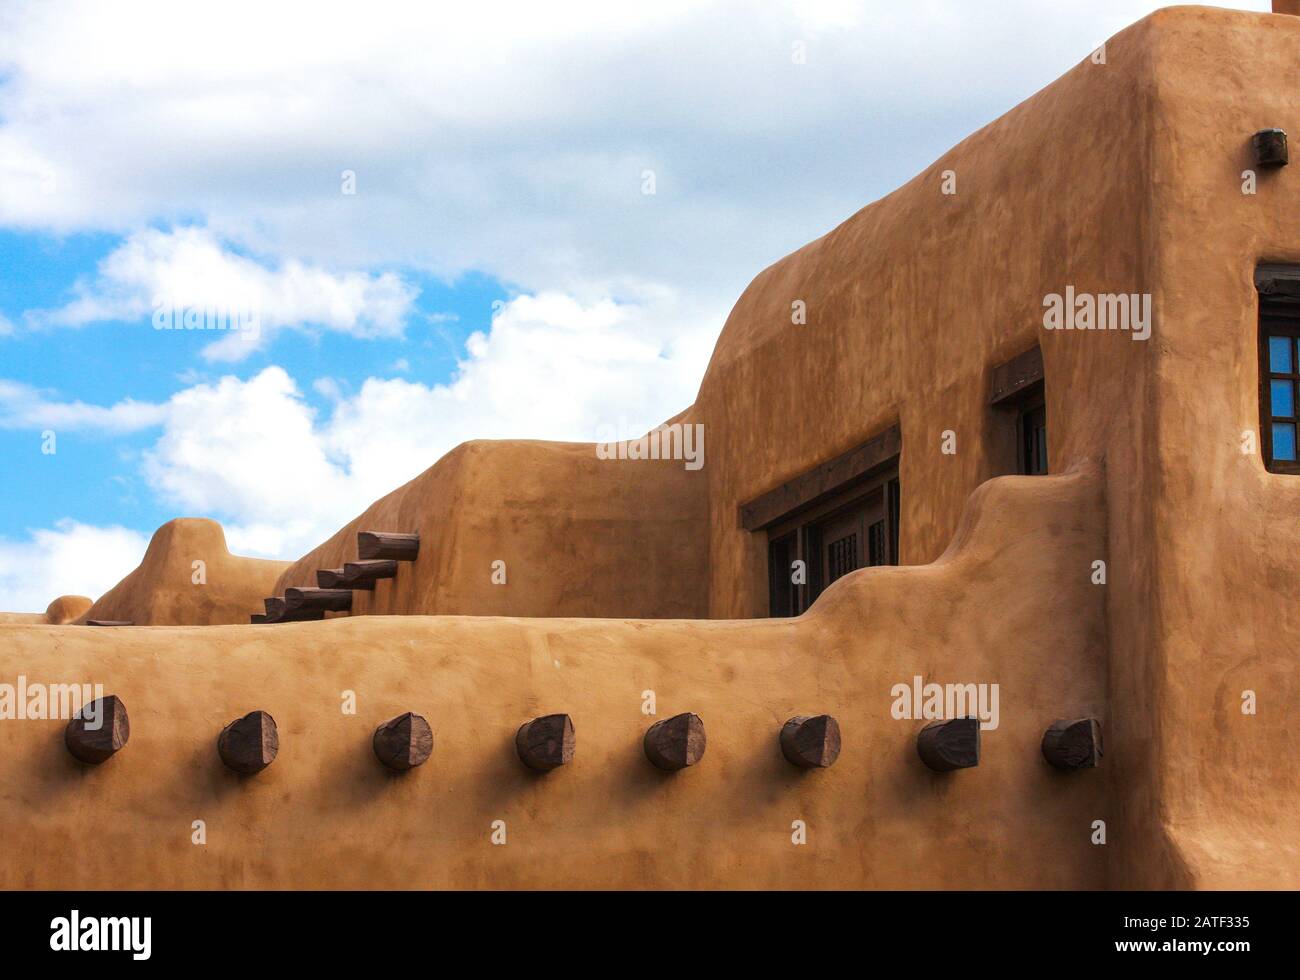 Pueblo adobe stucco stepped building. Contoured adobe plaster architecture with timber vigas. Santa Fe, New Mexico, USA Stock Photo